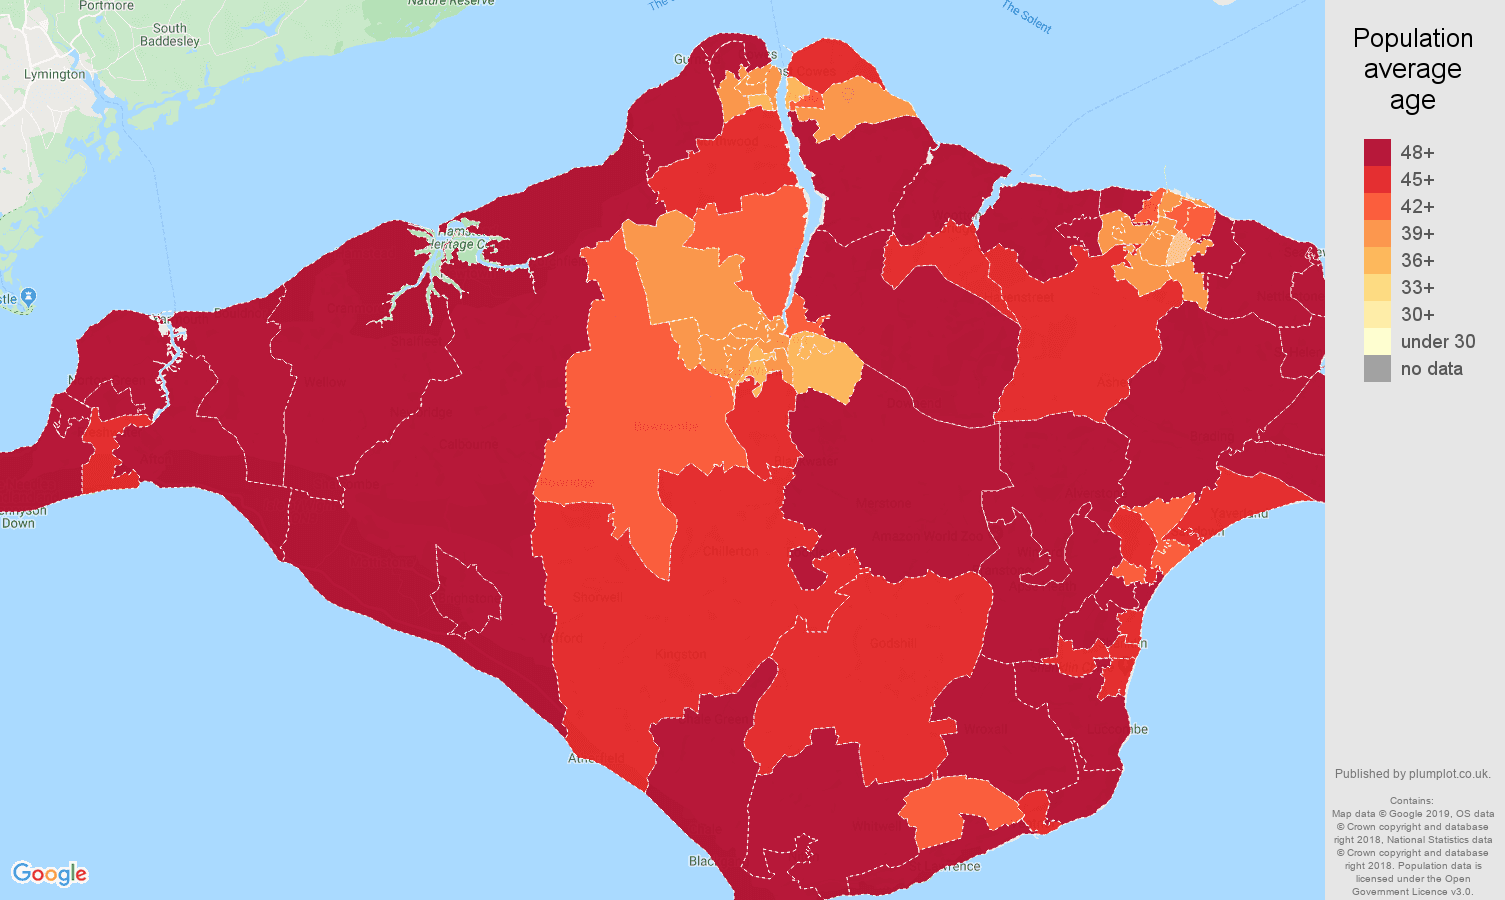 Isle of Wight population average age map